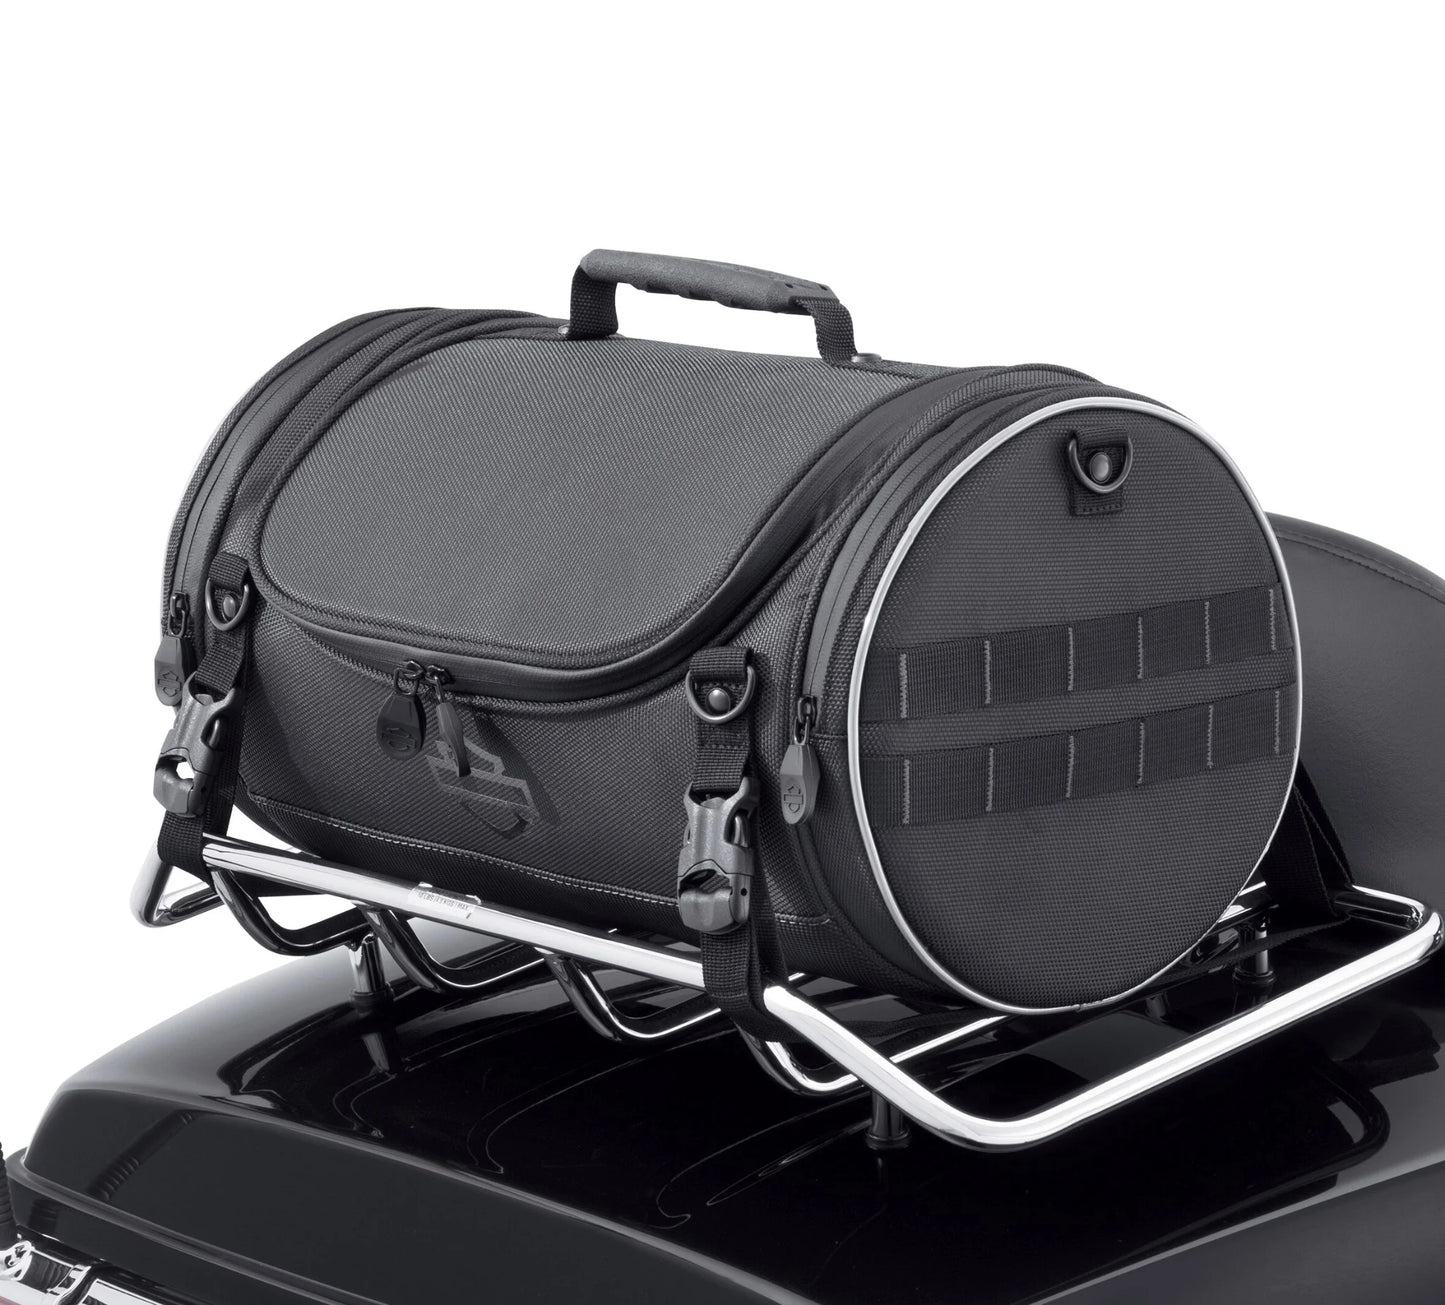 Harley-Davidson Onyx Premium Luggage Day Bag - 93300104